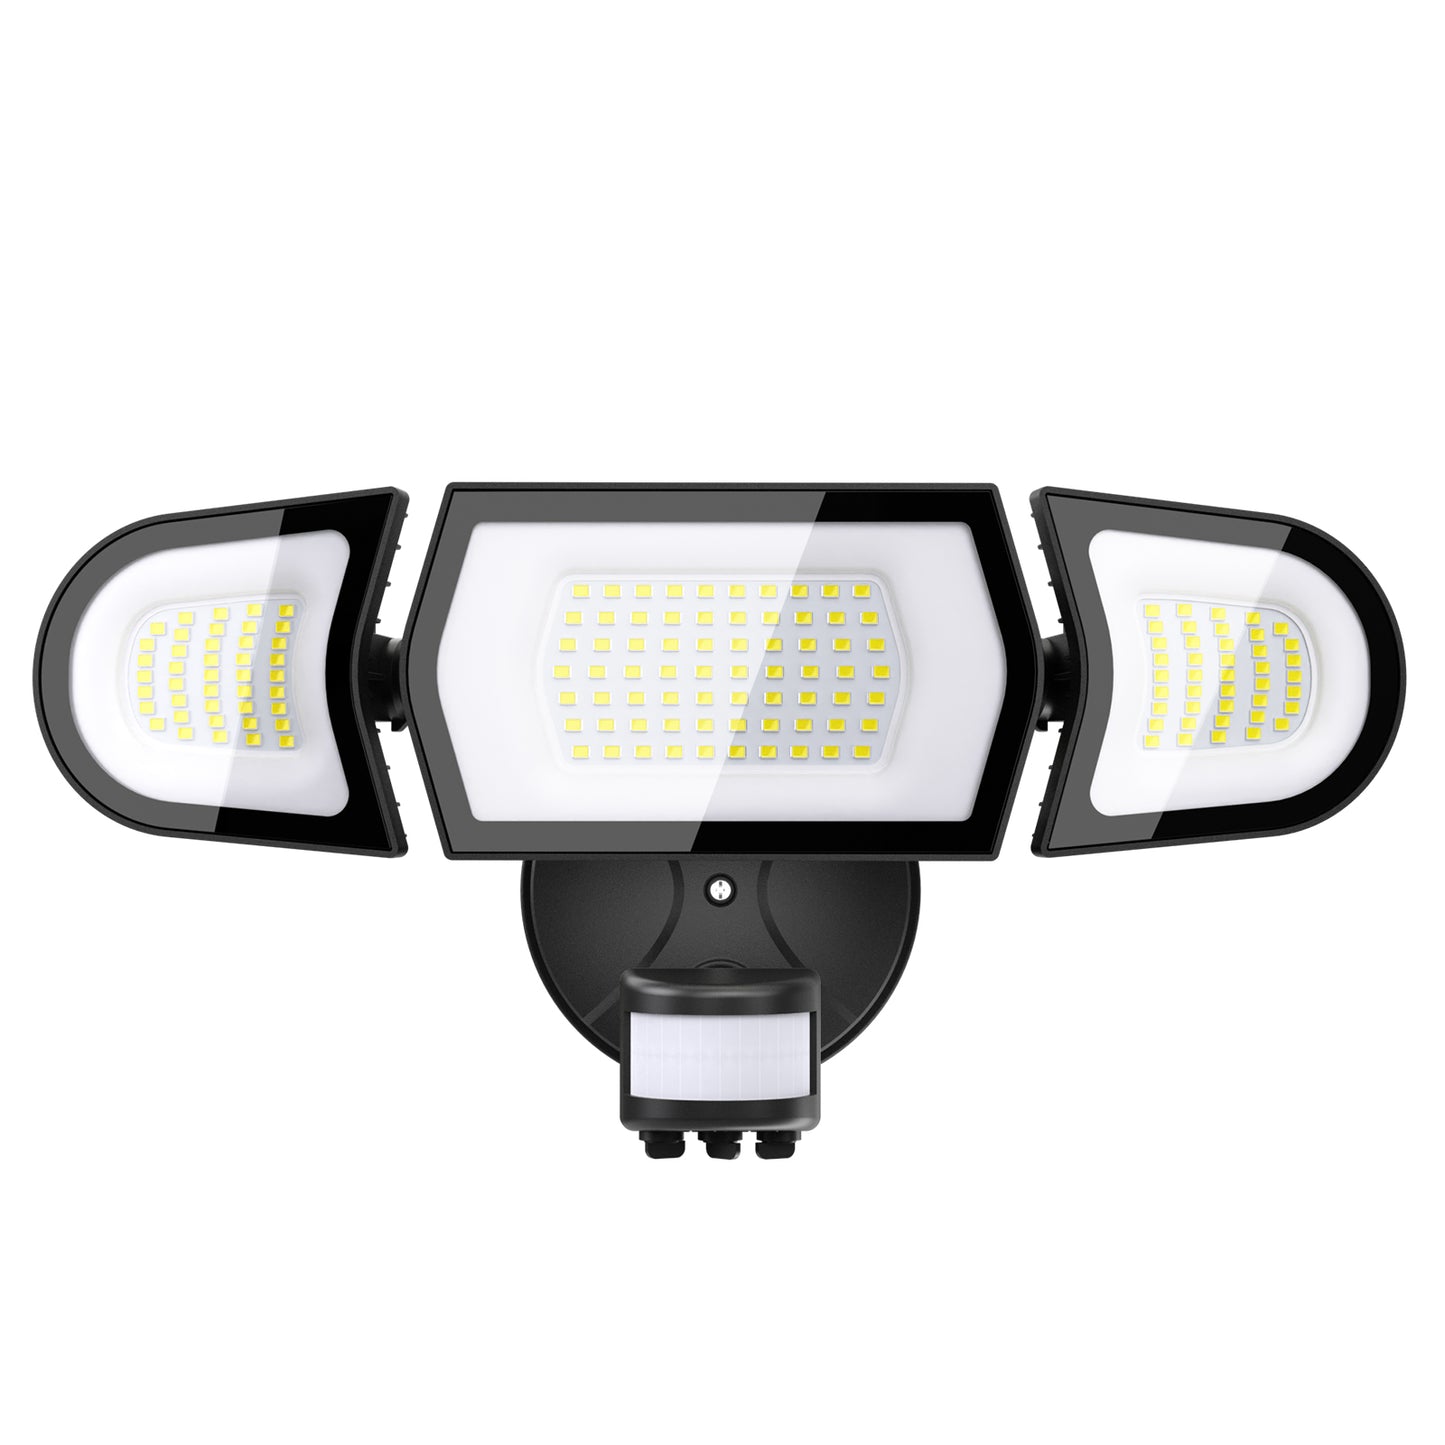 Olafus 100W Motion Sensor LED Security Light